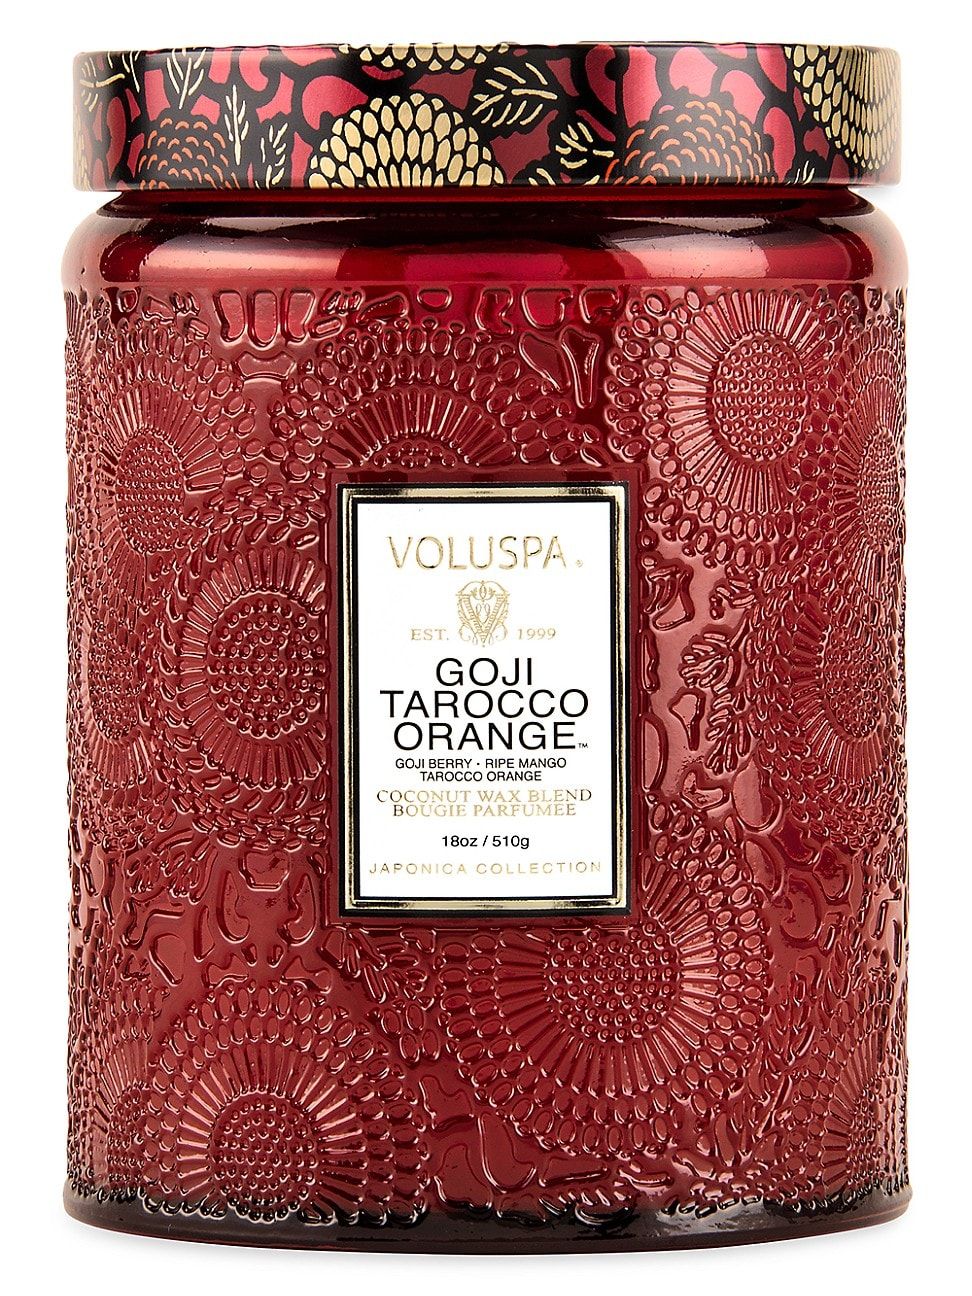 Goji Tarocco Orange Large Jar Candle | Saks Fifth Avenue